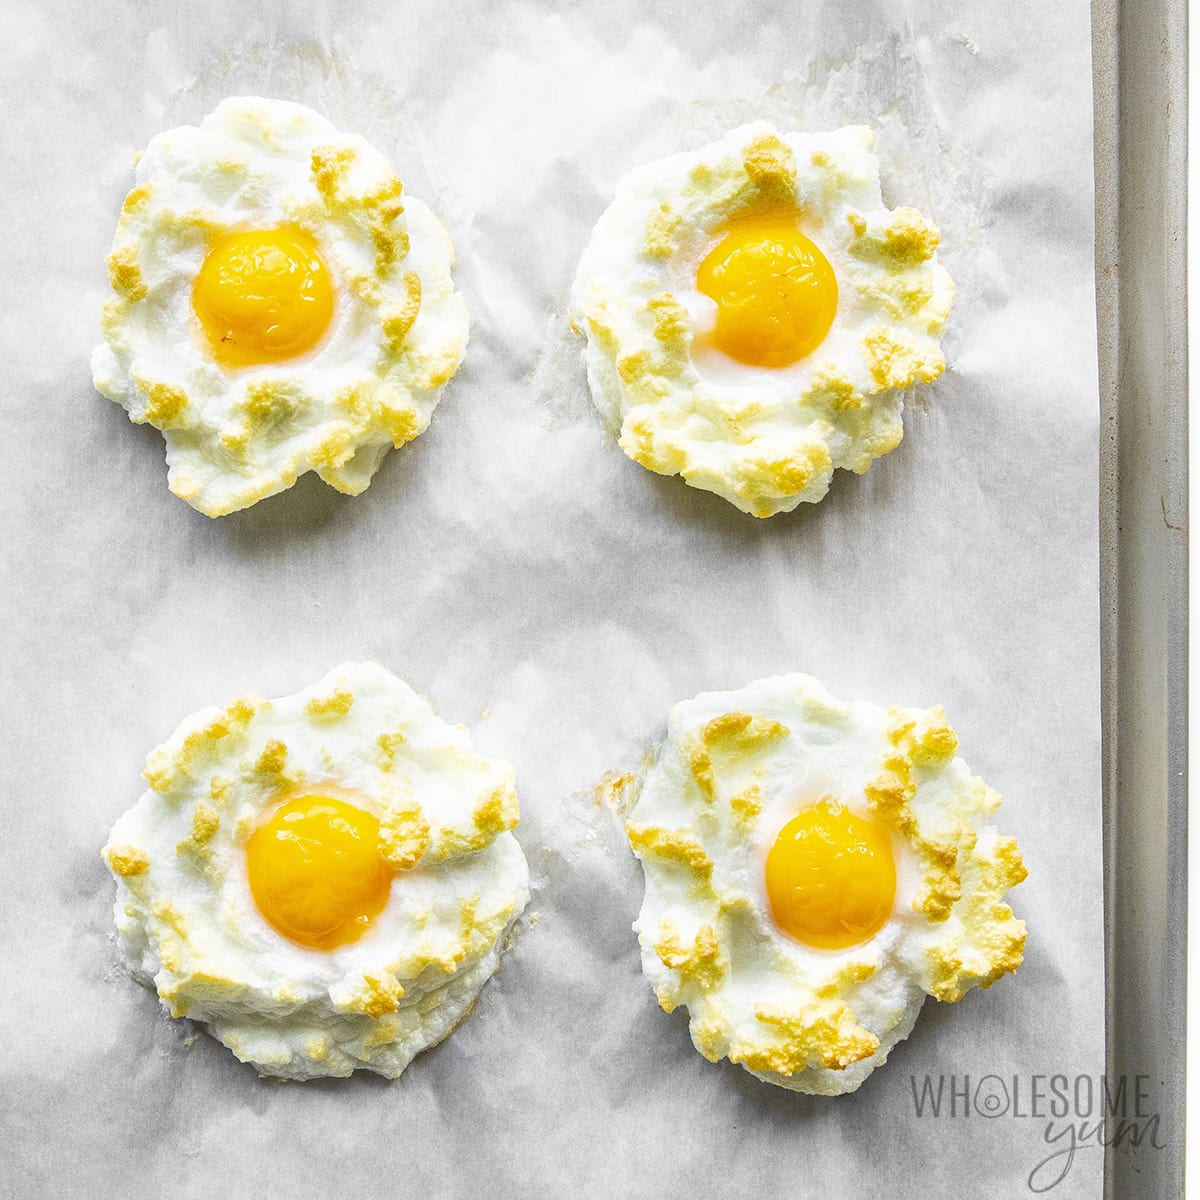 Baked cloud eggs.